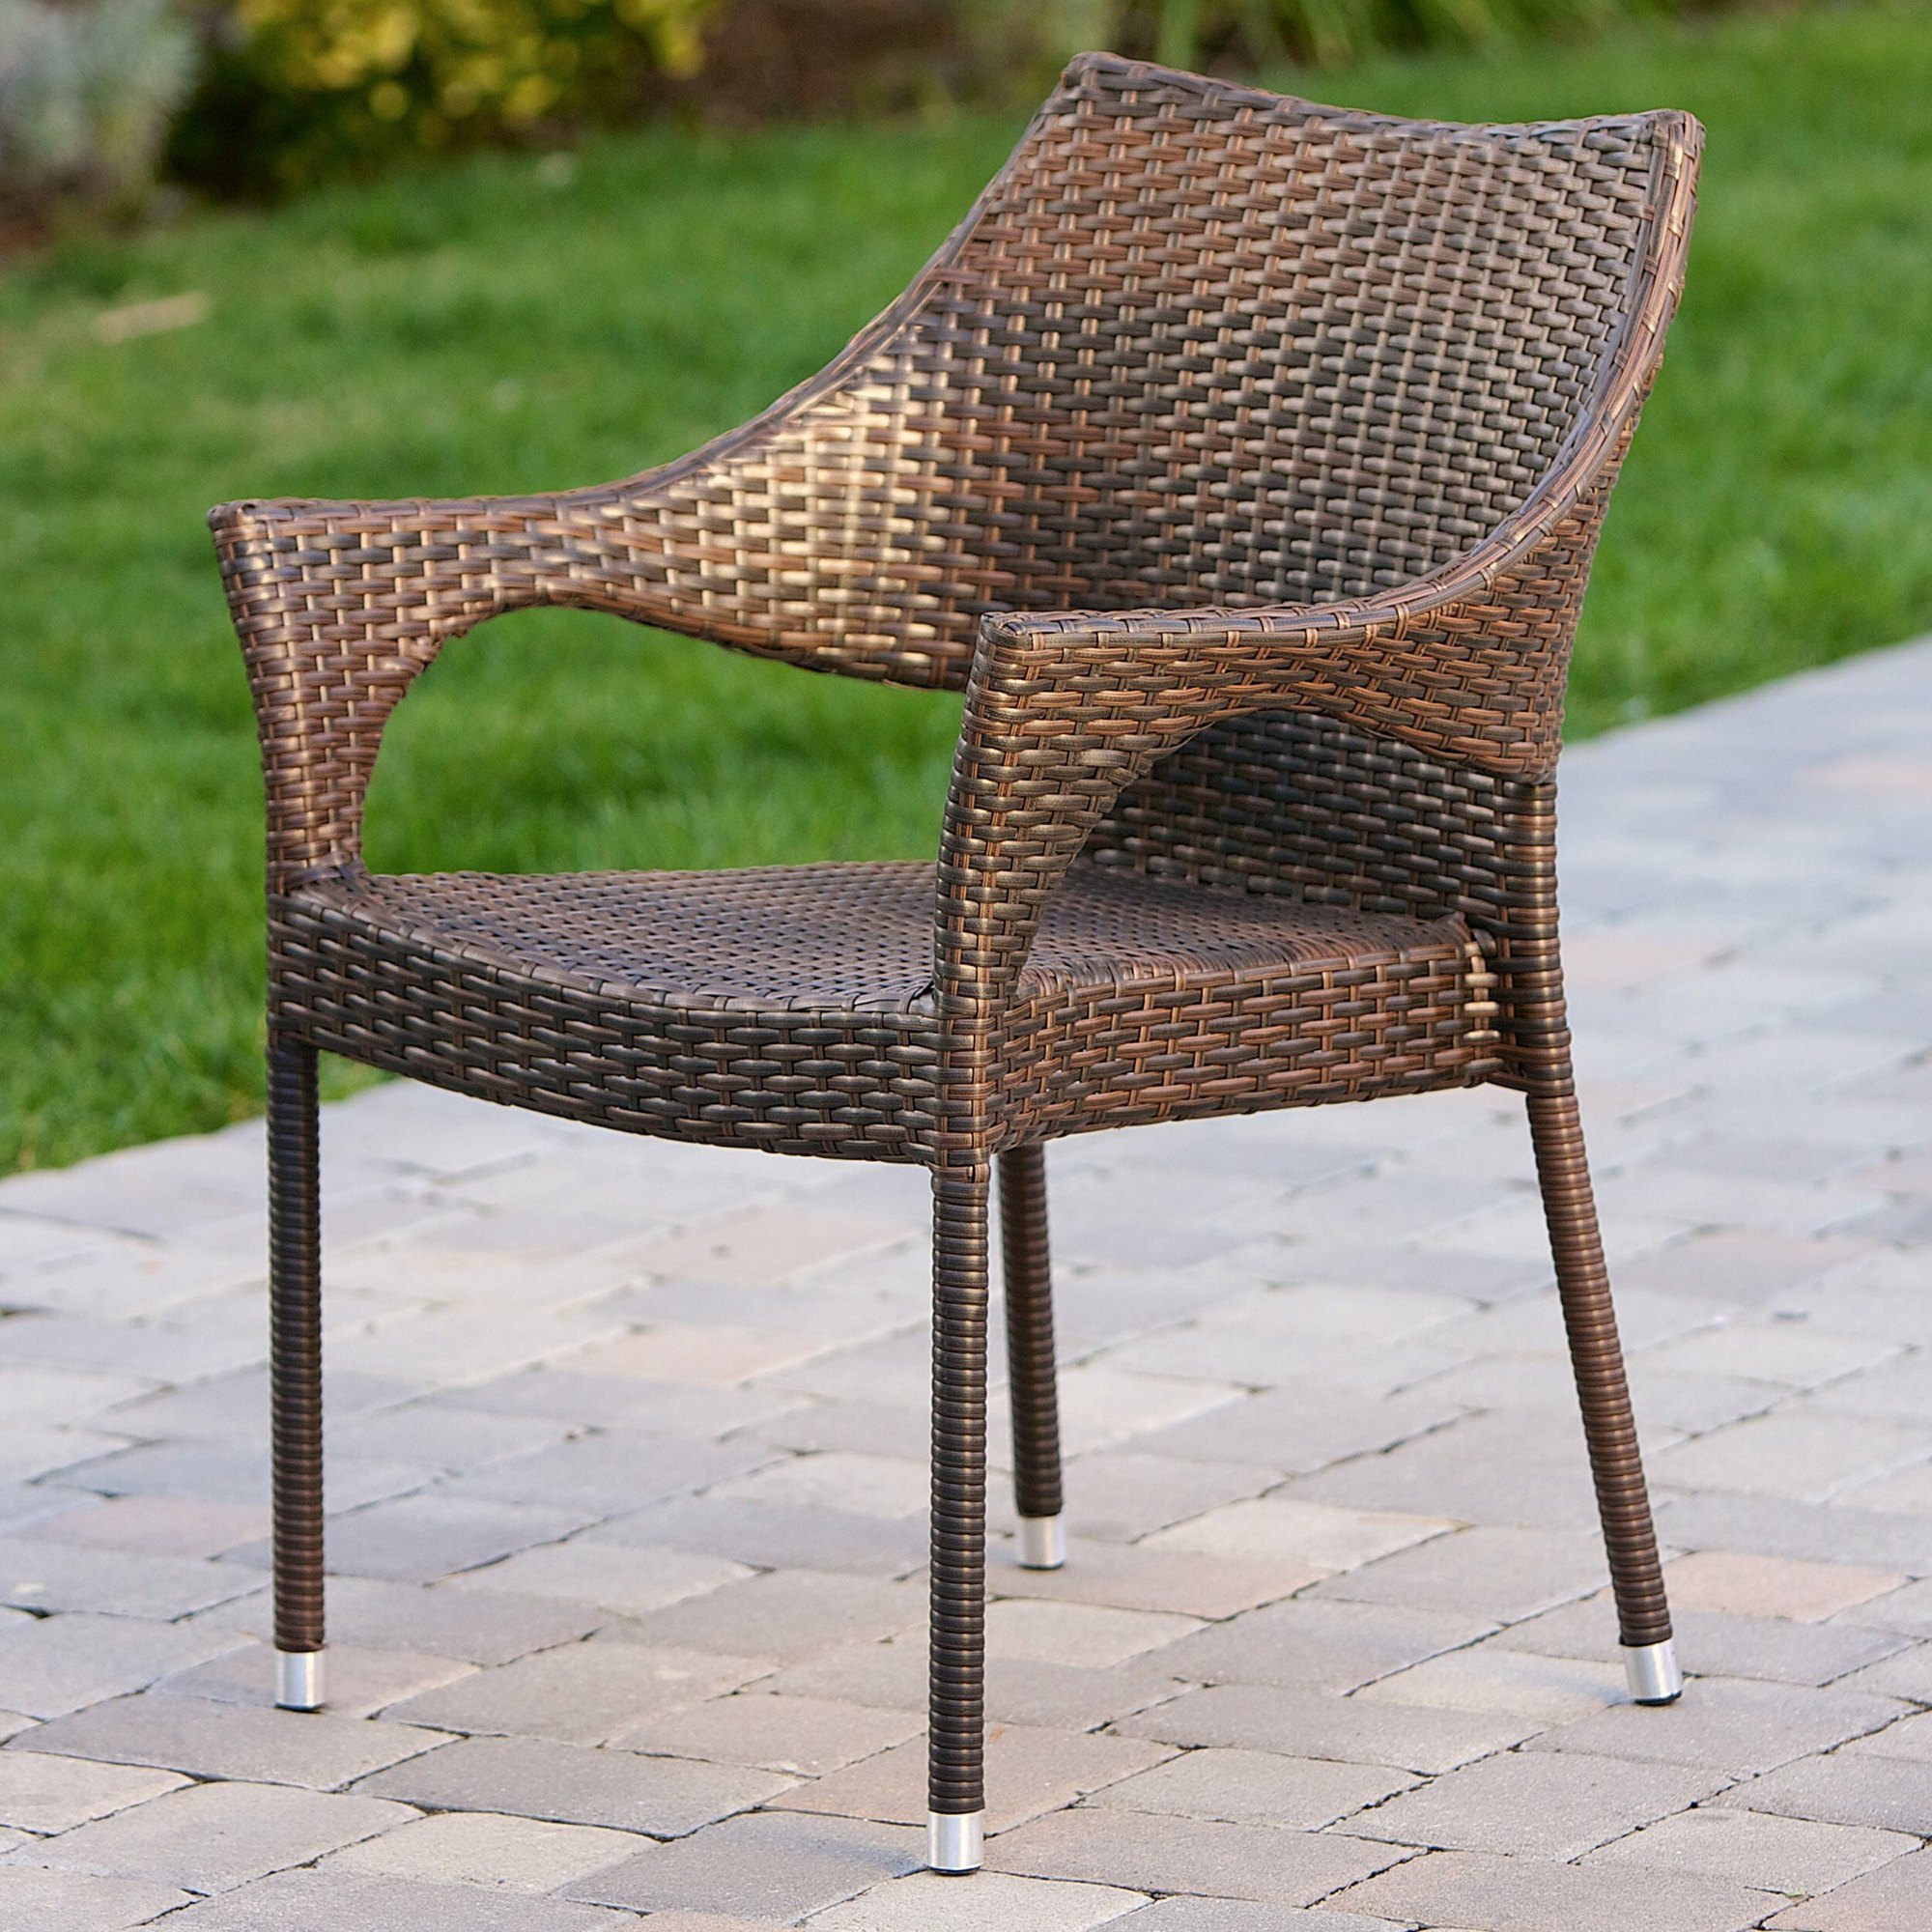 MM Furniture - Latest update - Wicker Chairs Manufacturers